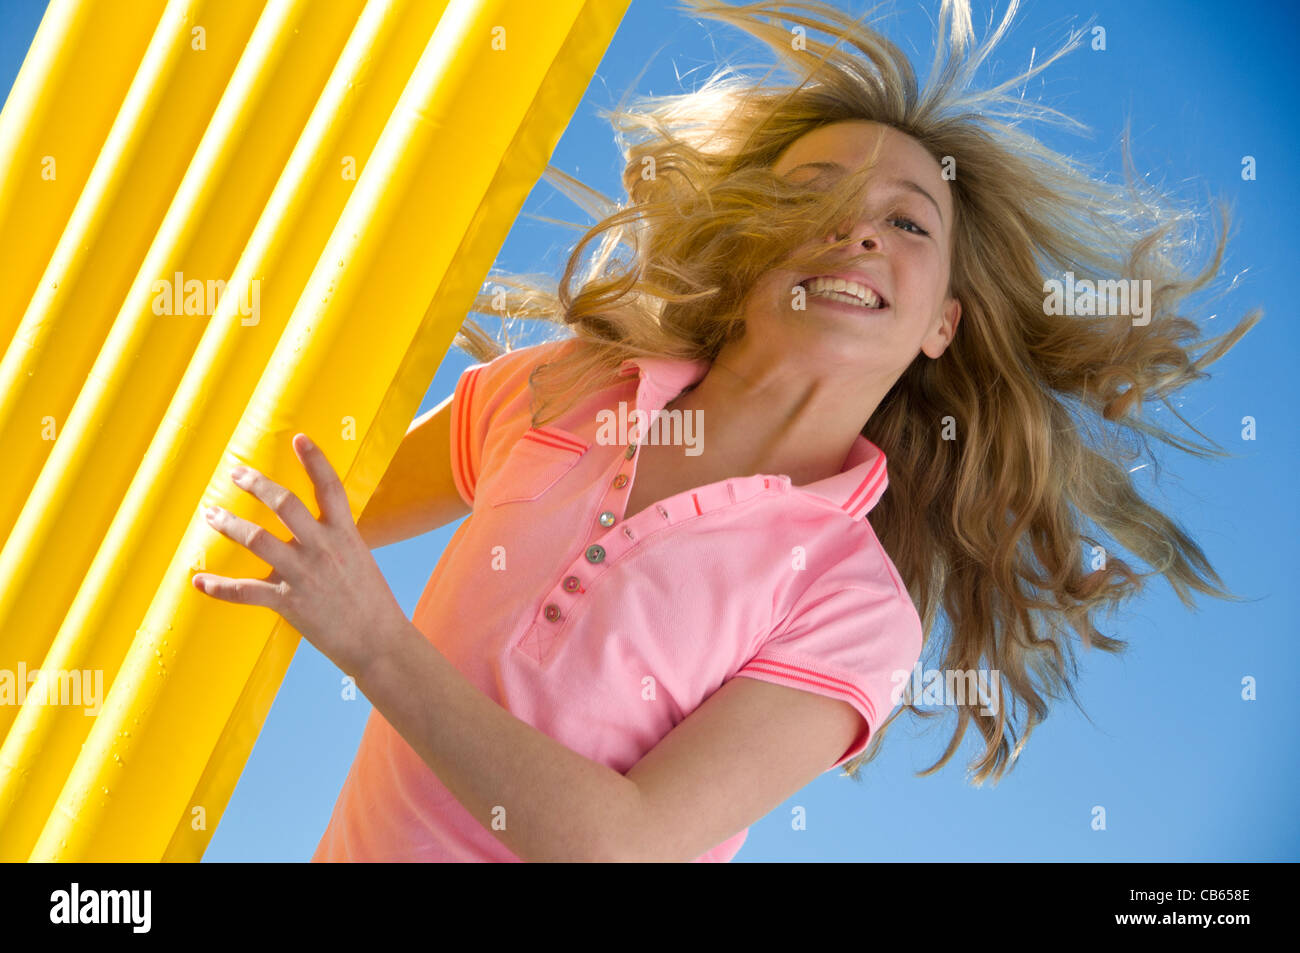 Fun moment holiday young teenage girl 13-16 years sun sky lilo Stock Photo